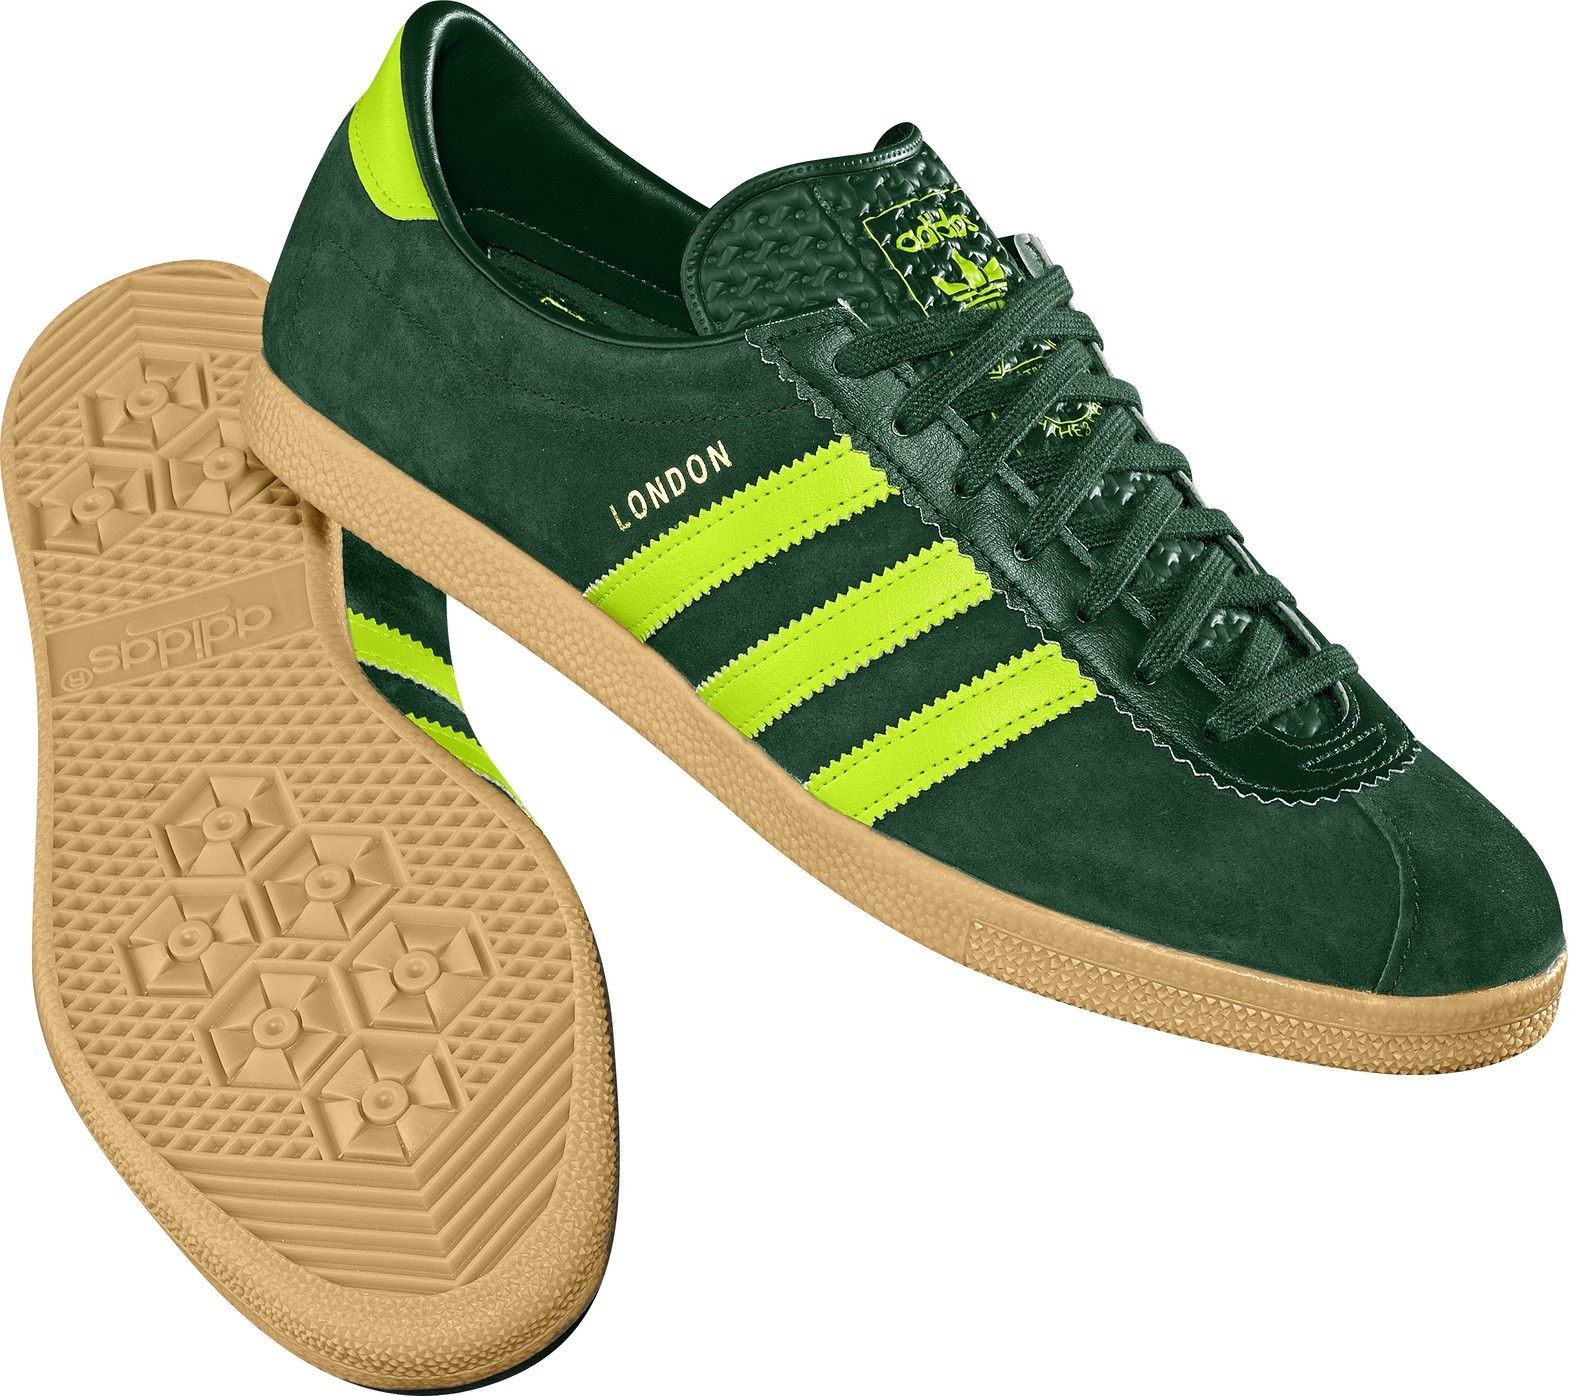 Adidas Originals Sneaker London G44159 dgreen/slime